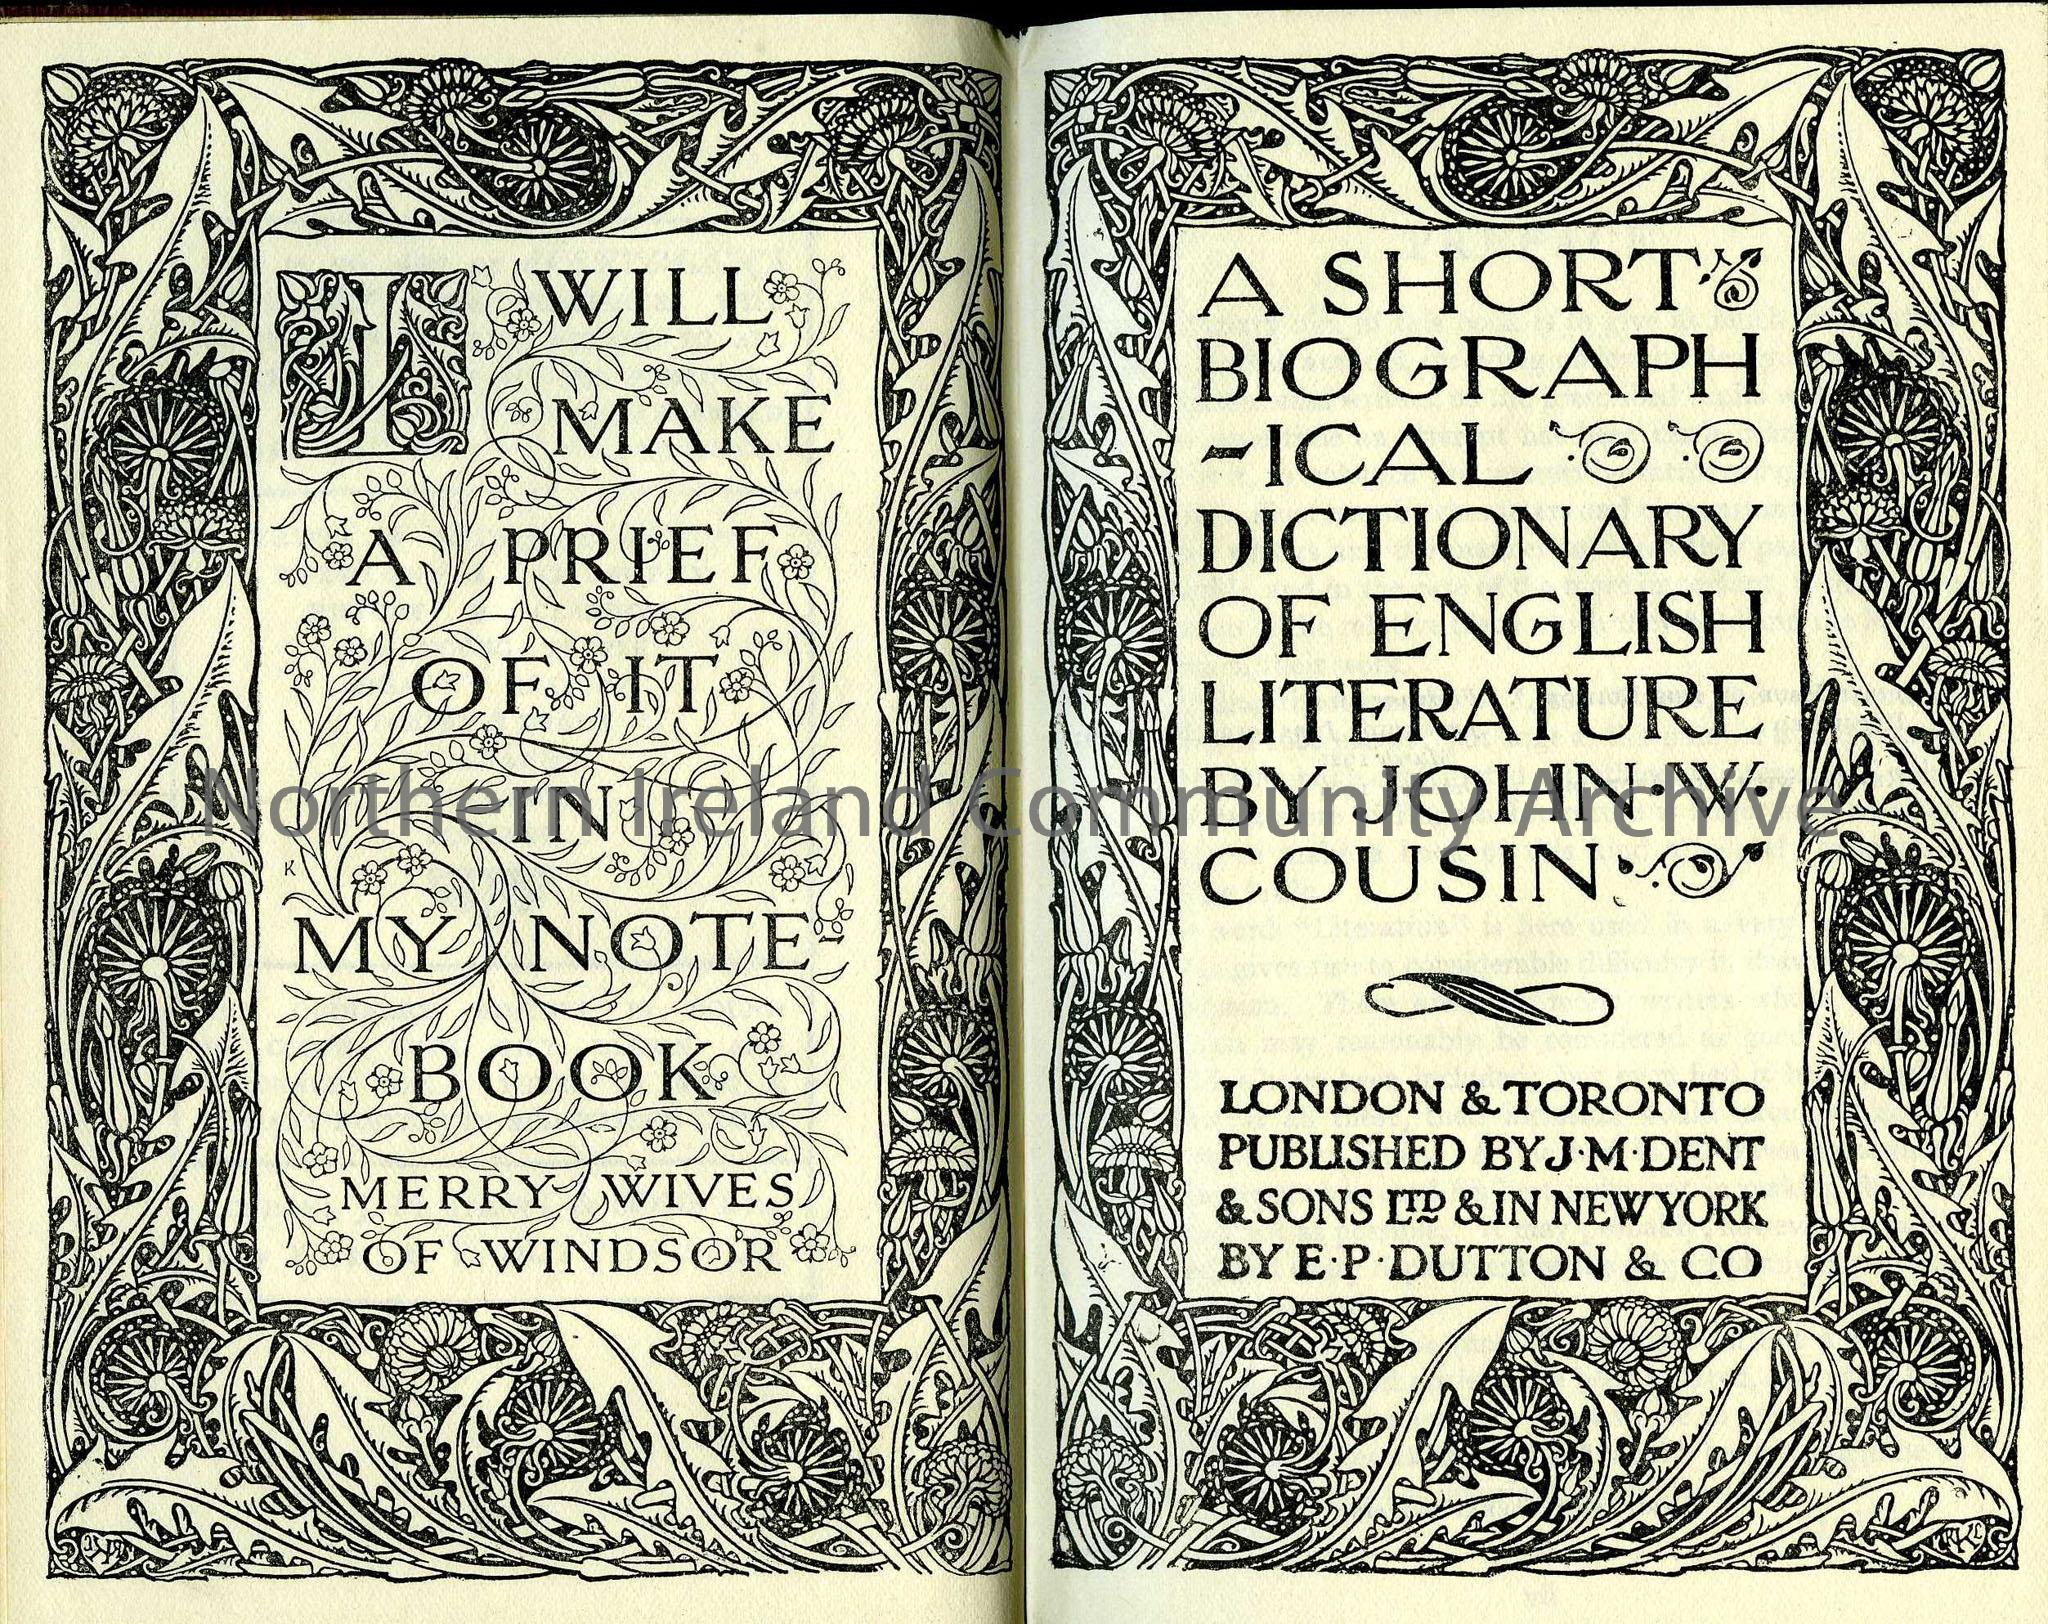 A Short Biographcal Dictionary of English Literature